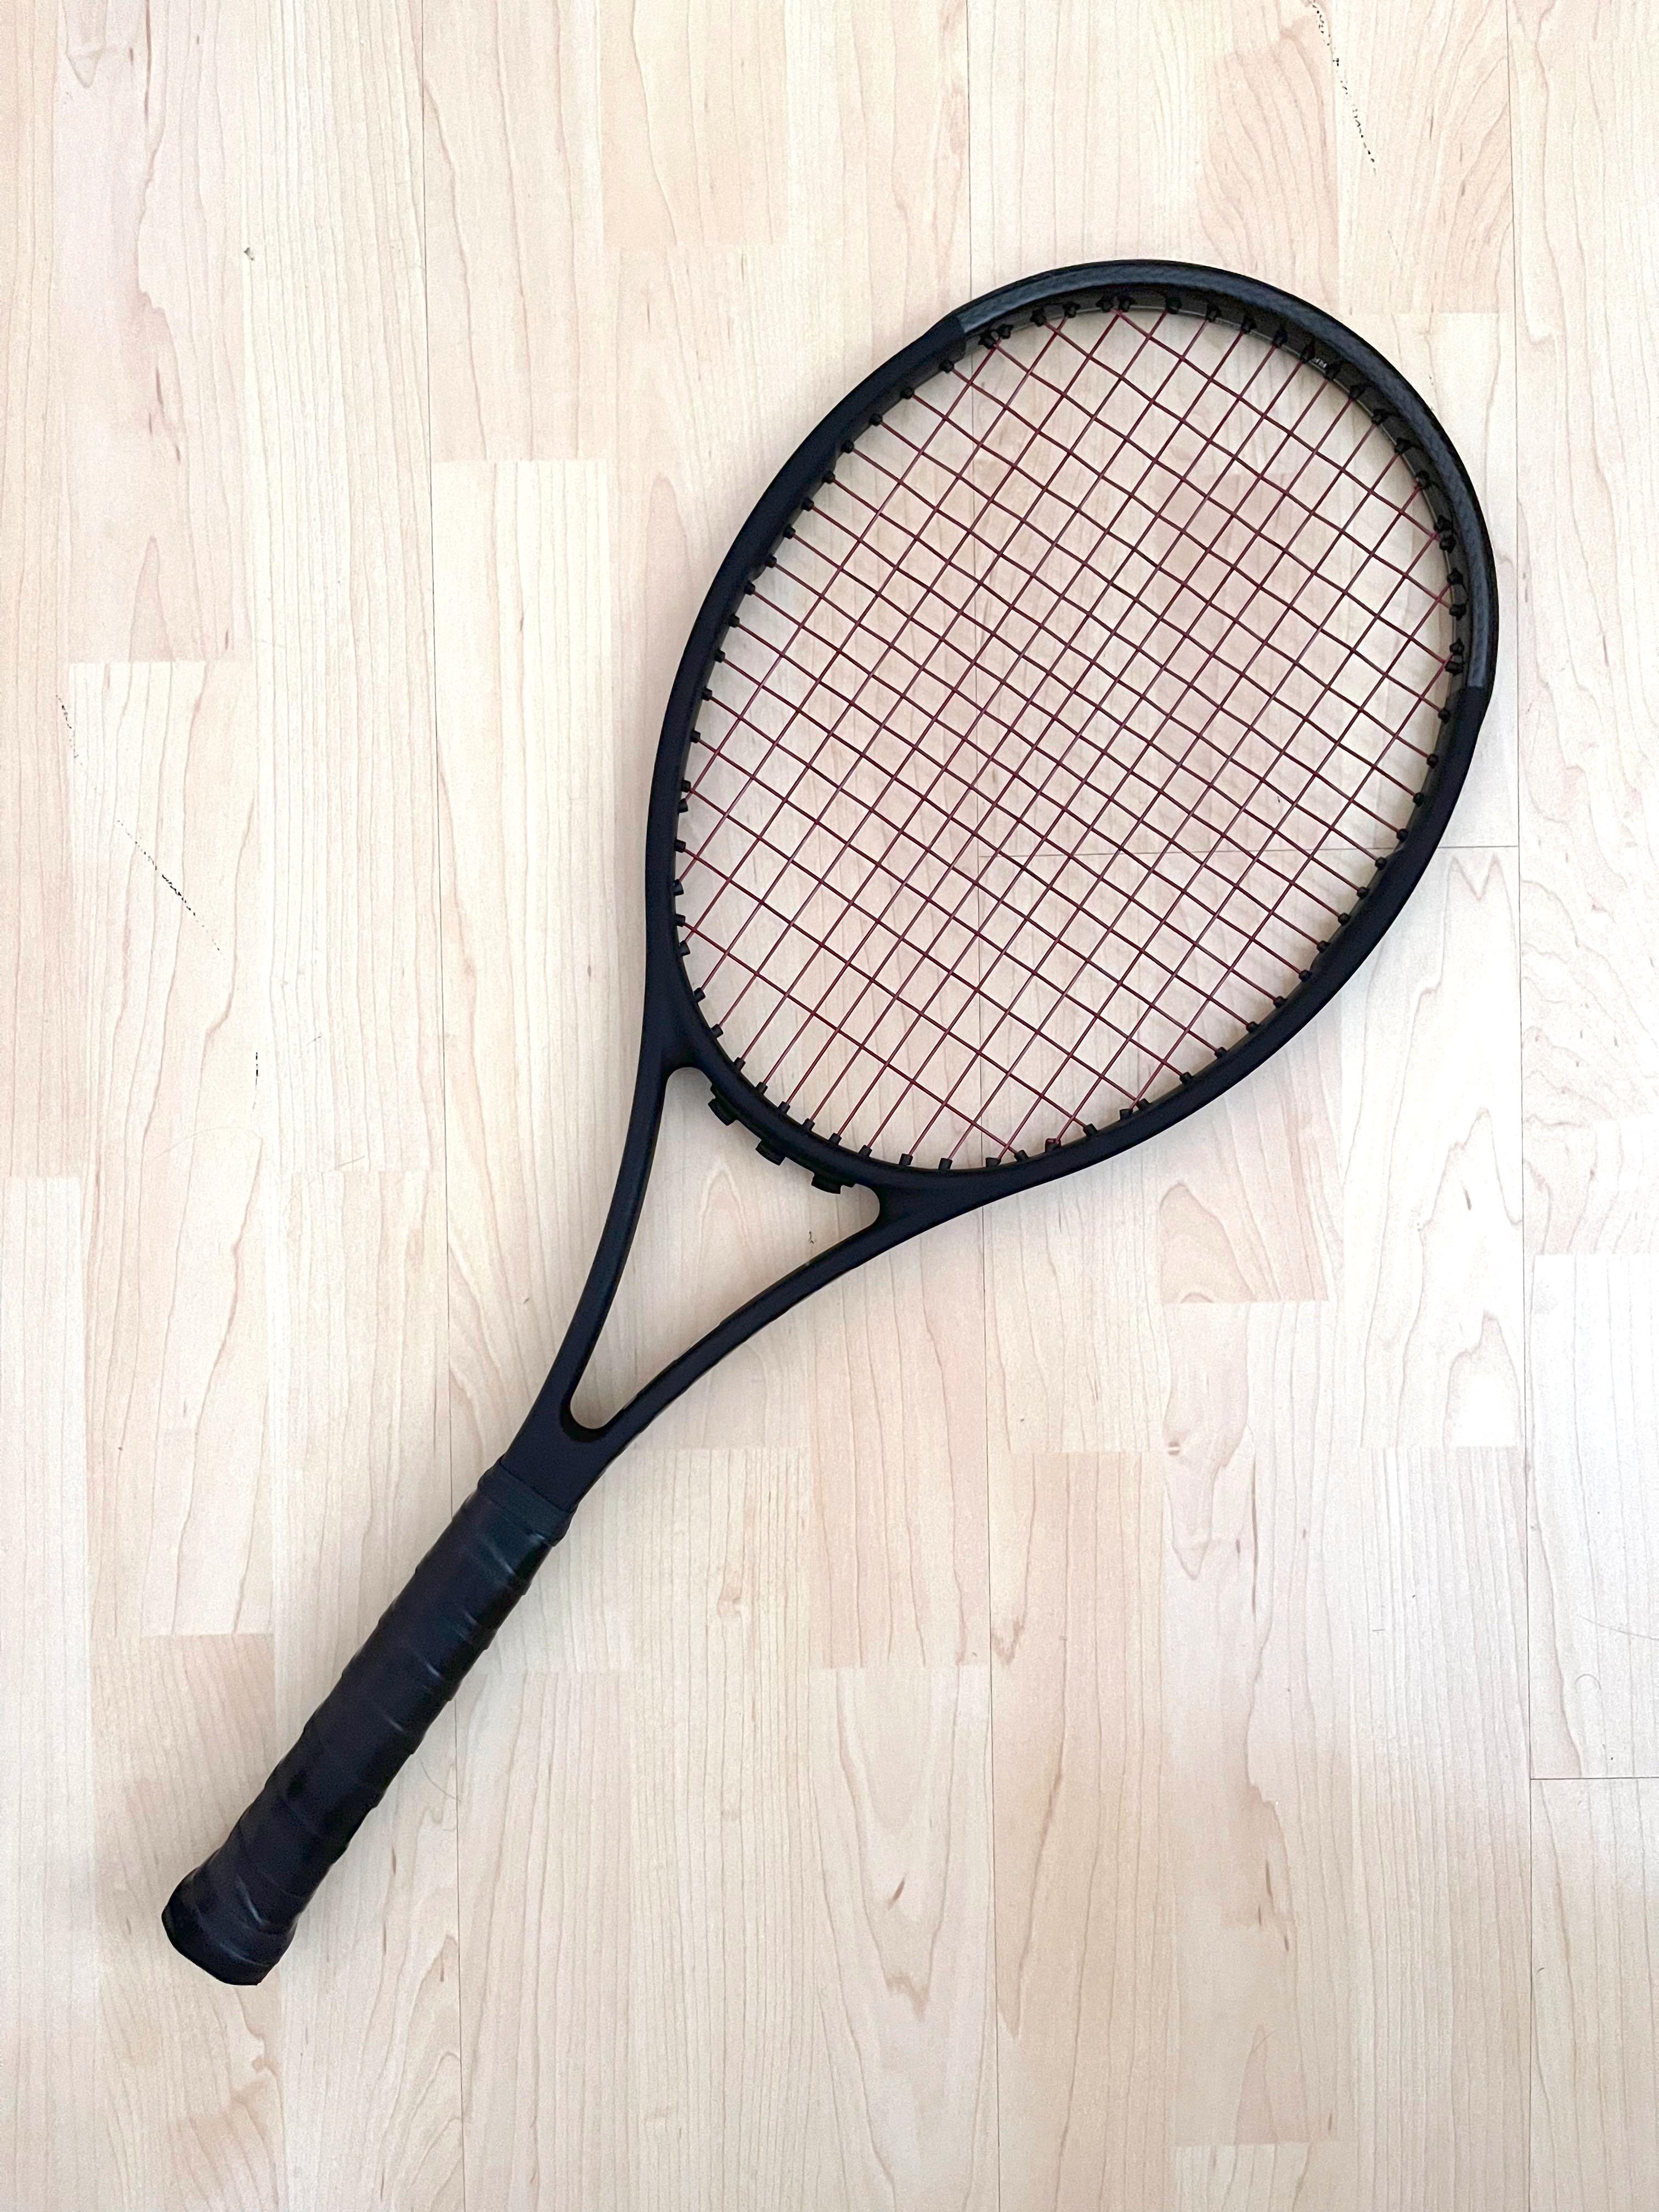 Wilson RF97 V13 (340g) Pro Staff Tennis Racket, Sports Equipment